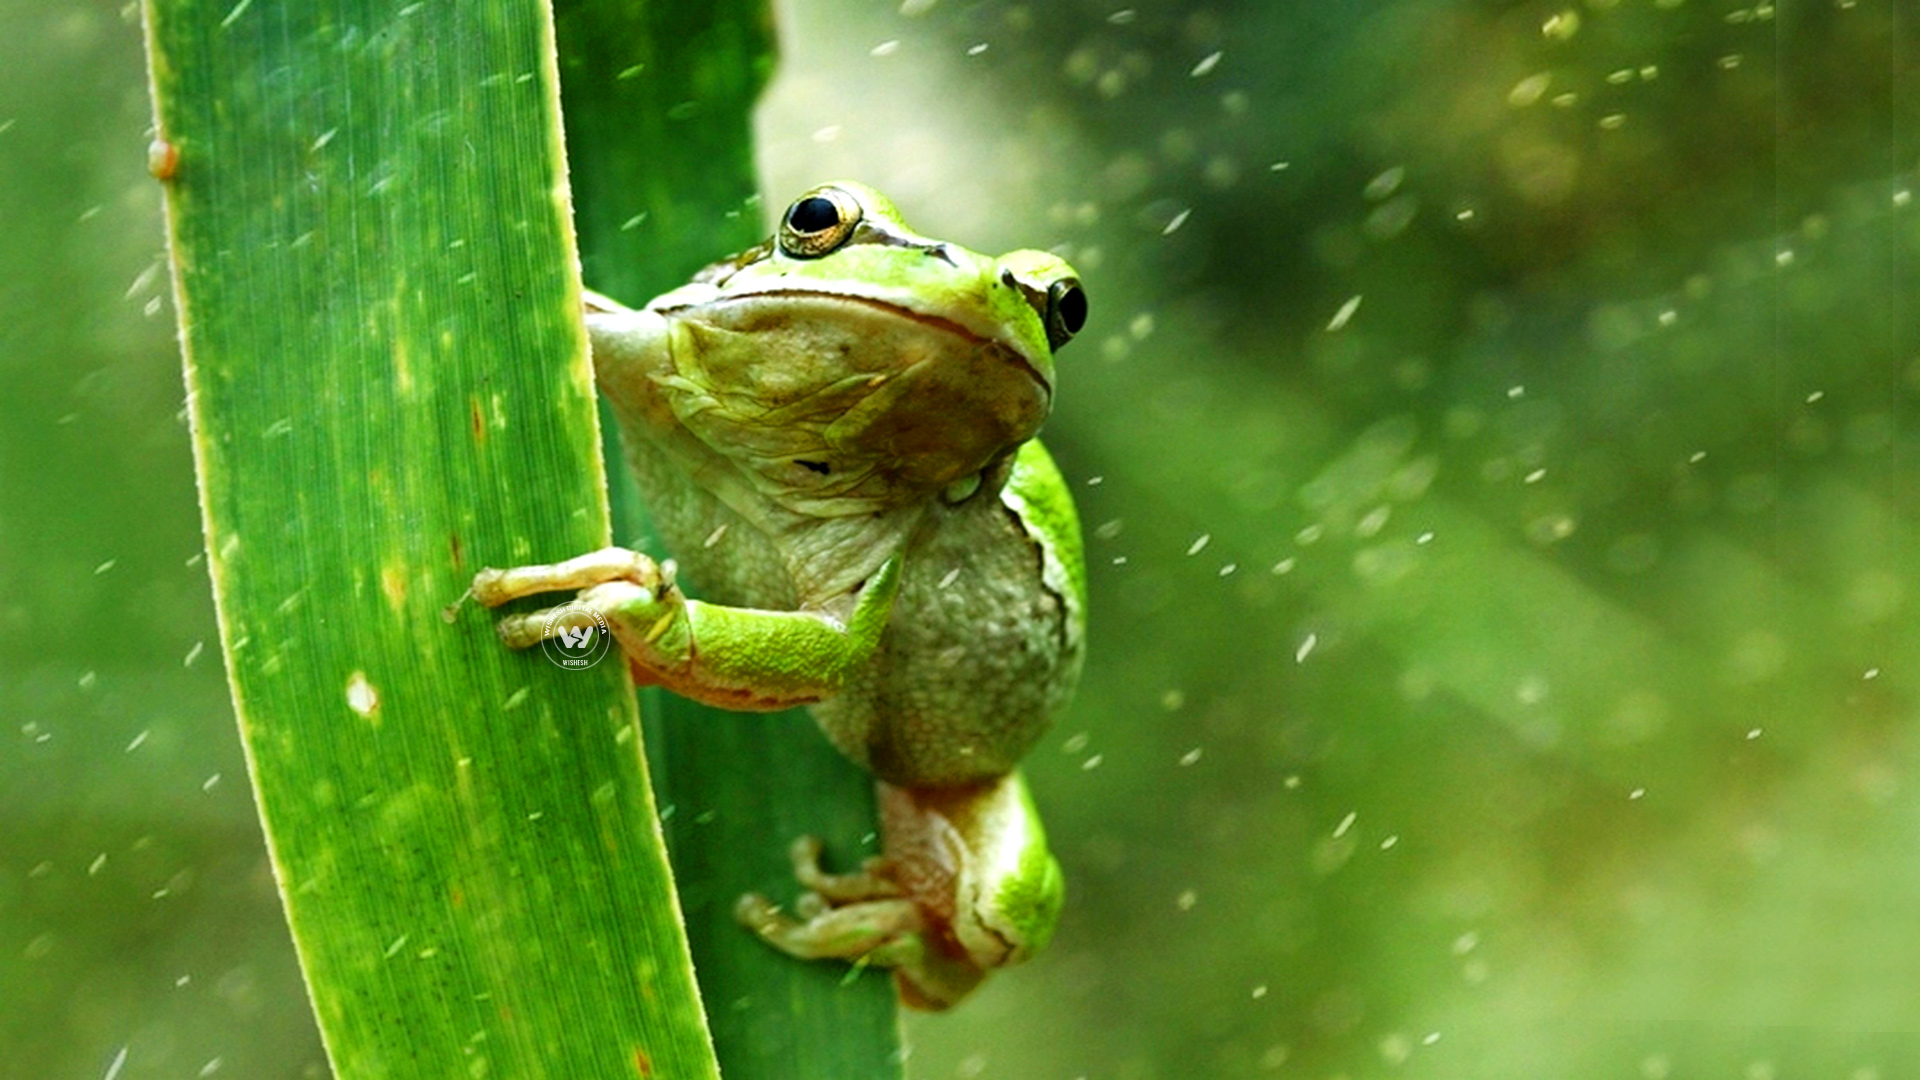 frog | Frog in the rain | Wallpaper 2of 5 | Frog in the rain wallpapers